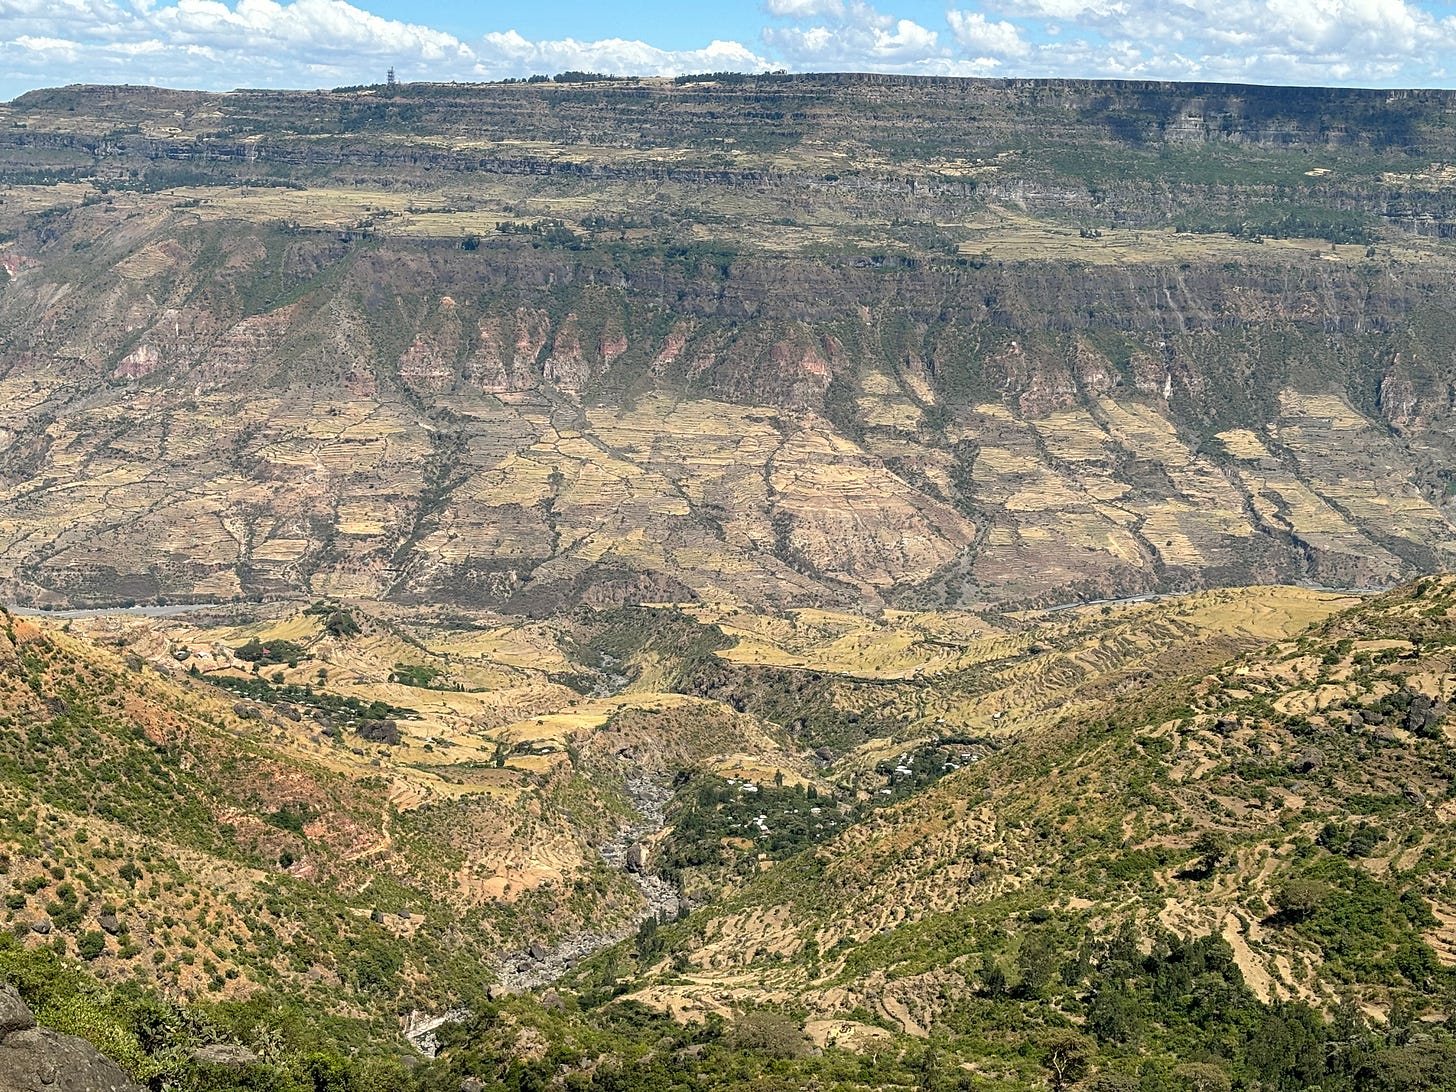 Canyon country near to Debra Libanos, north of Addis Ababa